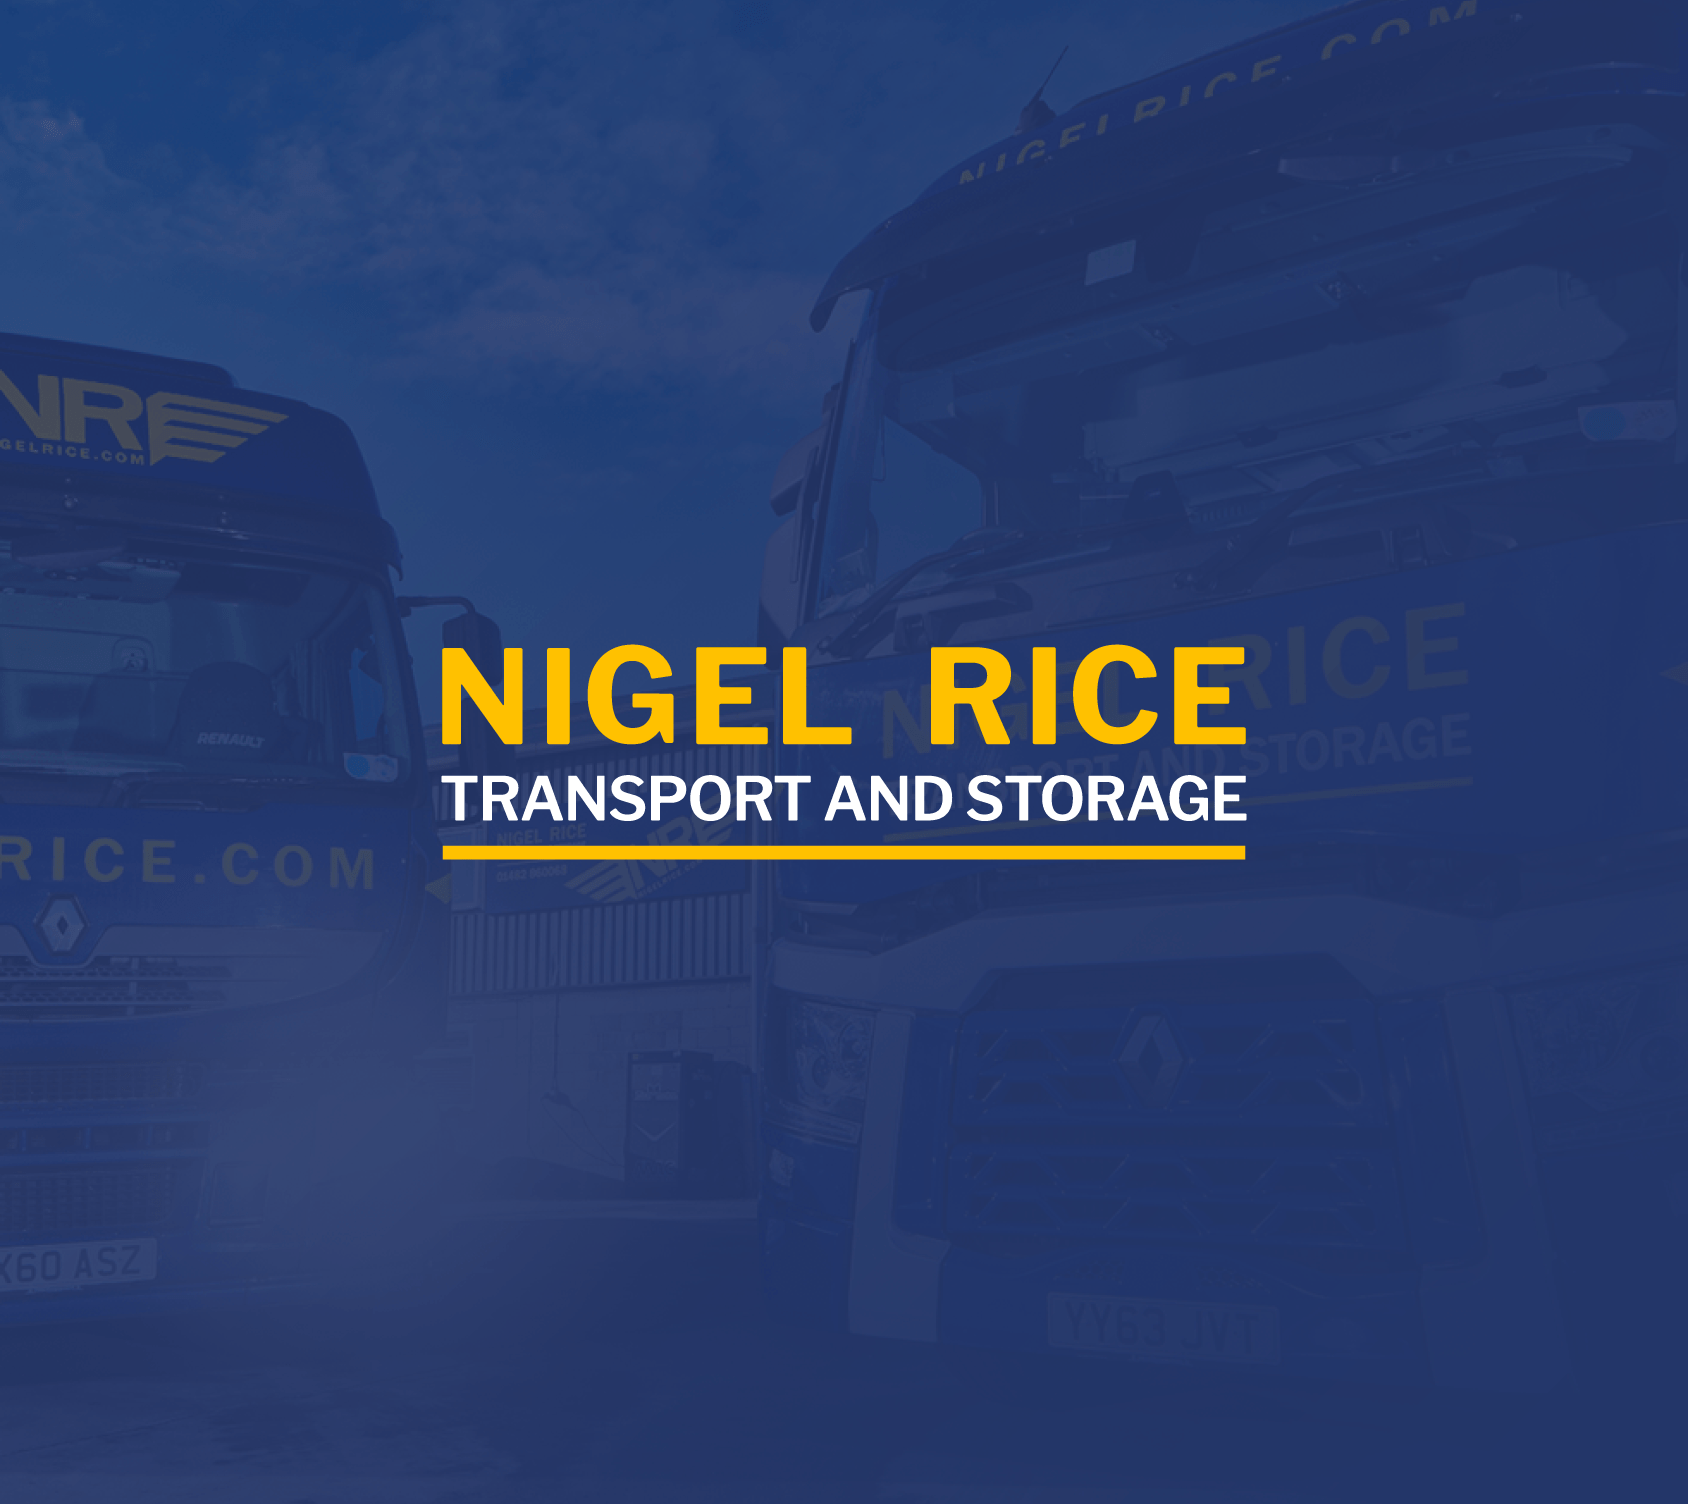 Import & Export Services, Transport & Distribution Hull, Nigel RiceHull,